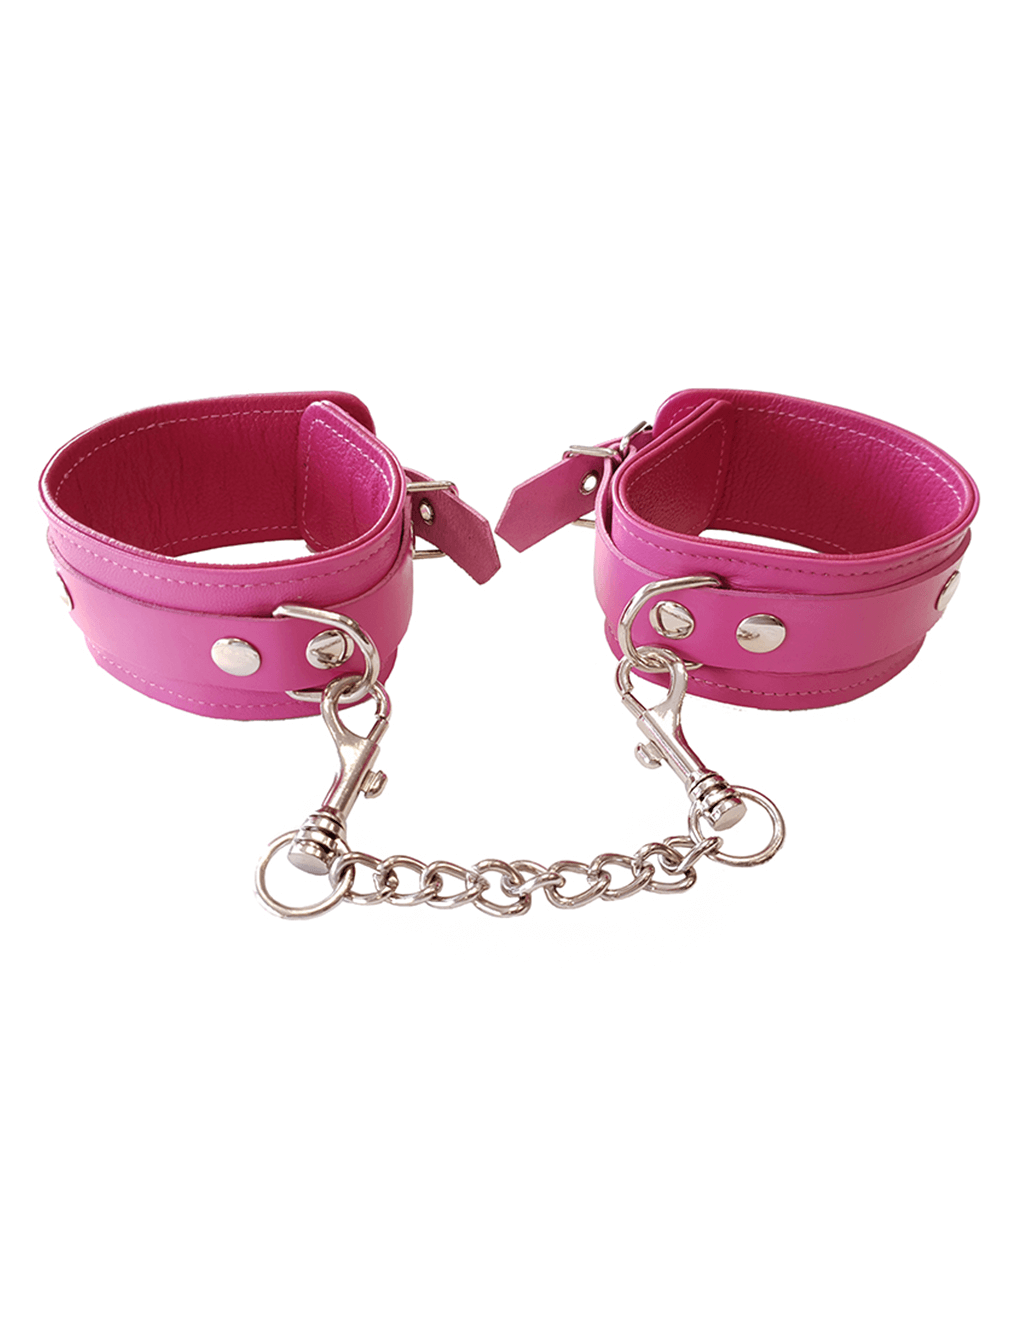 Rouge Leather Wrist Cuffs - Pink - Main